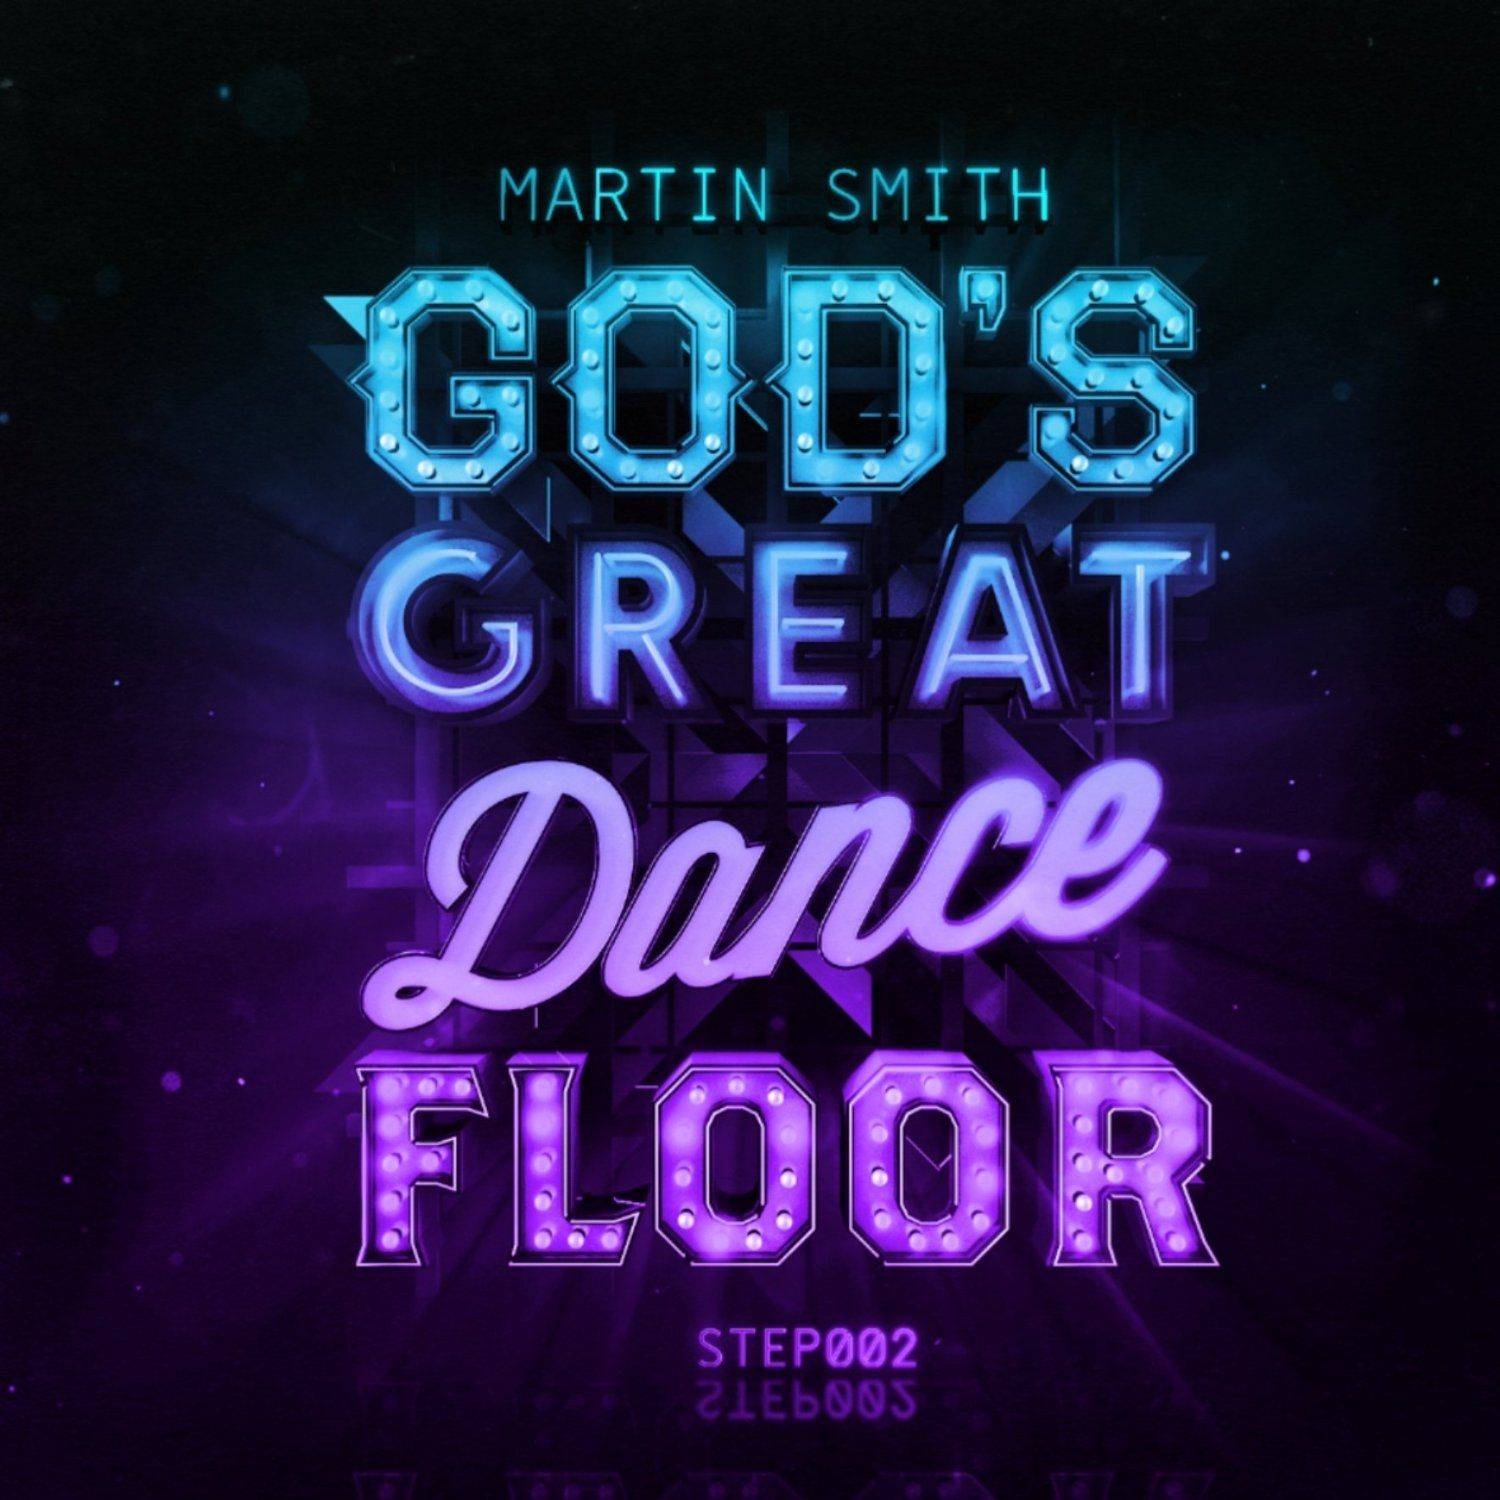 God's Great Dance Floor Step 02